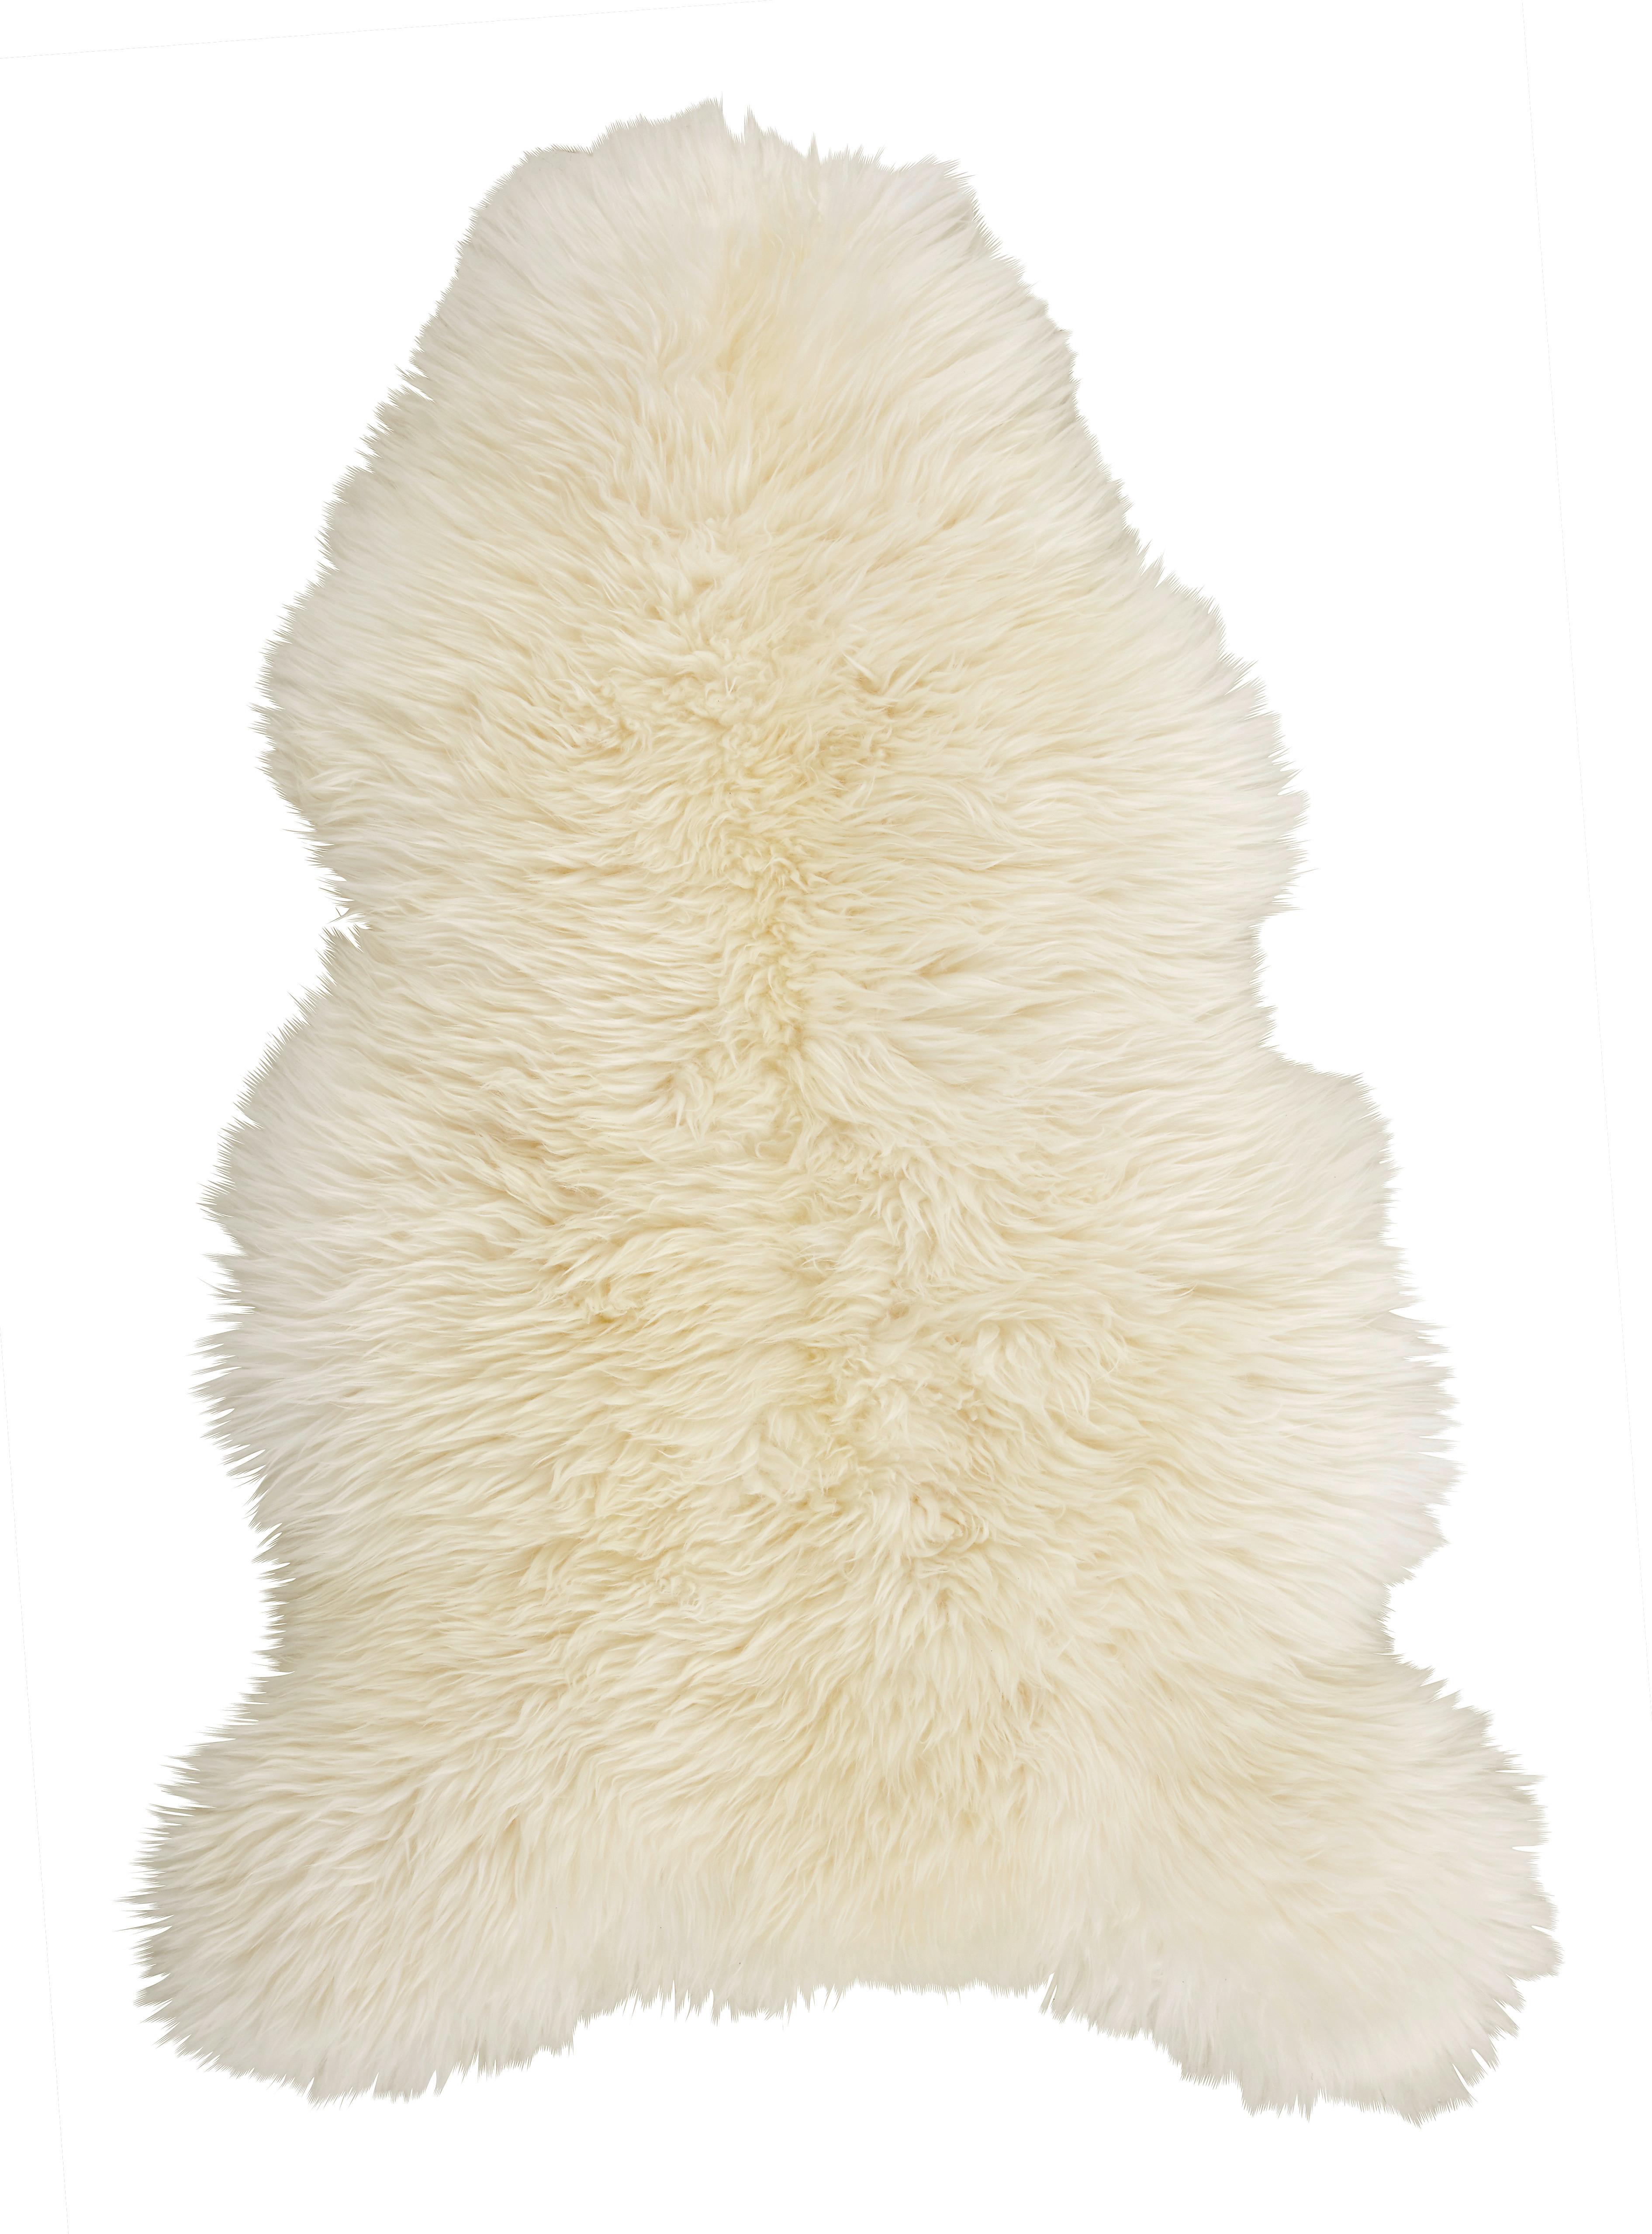 Schaffell Jenny in Weiß ca.90x60cm - Weiß, Fell (90-105/60cm) - Modern Living